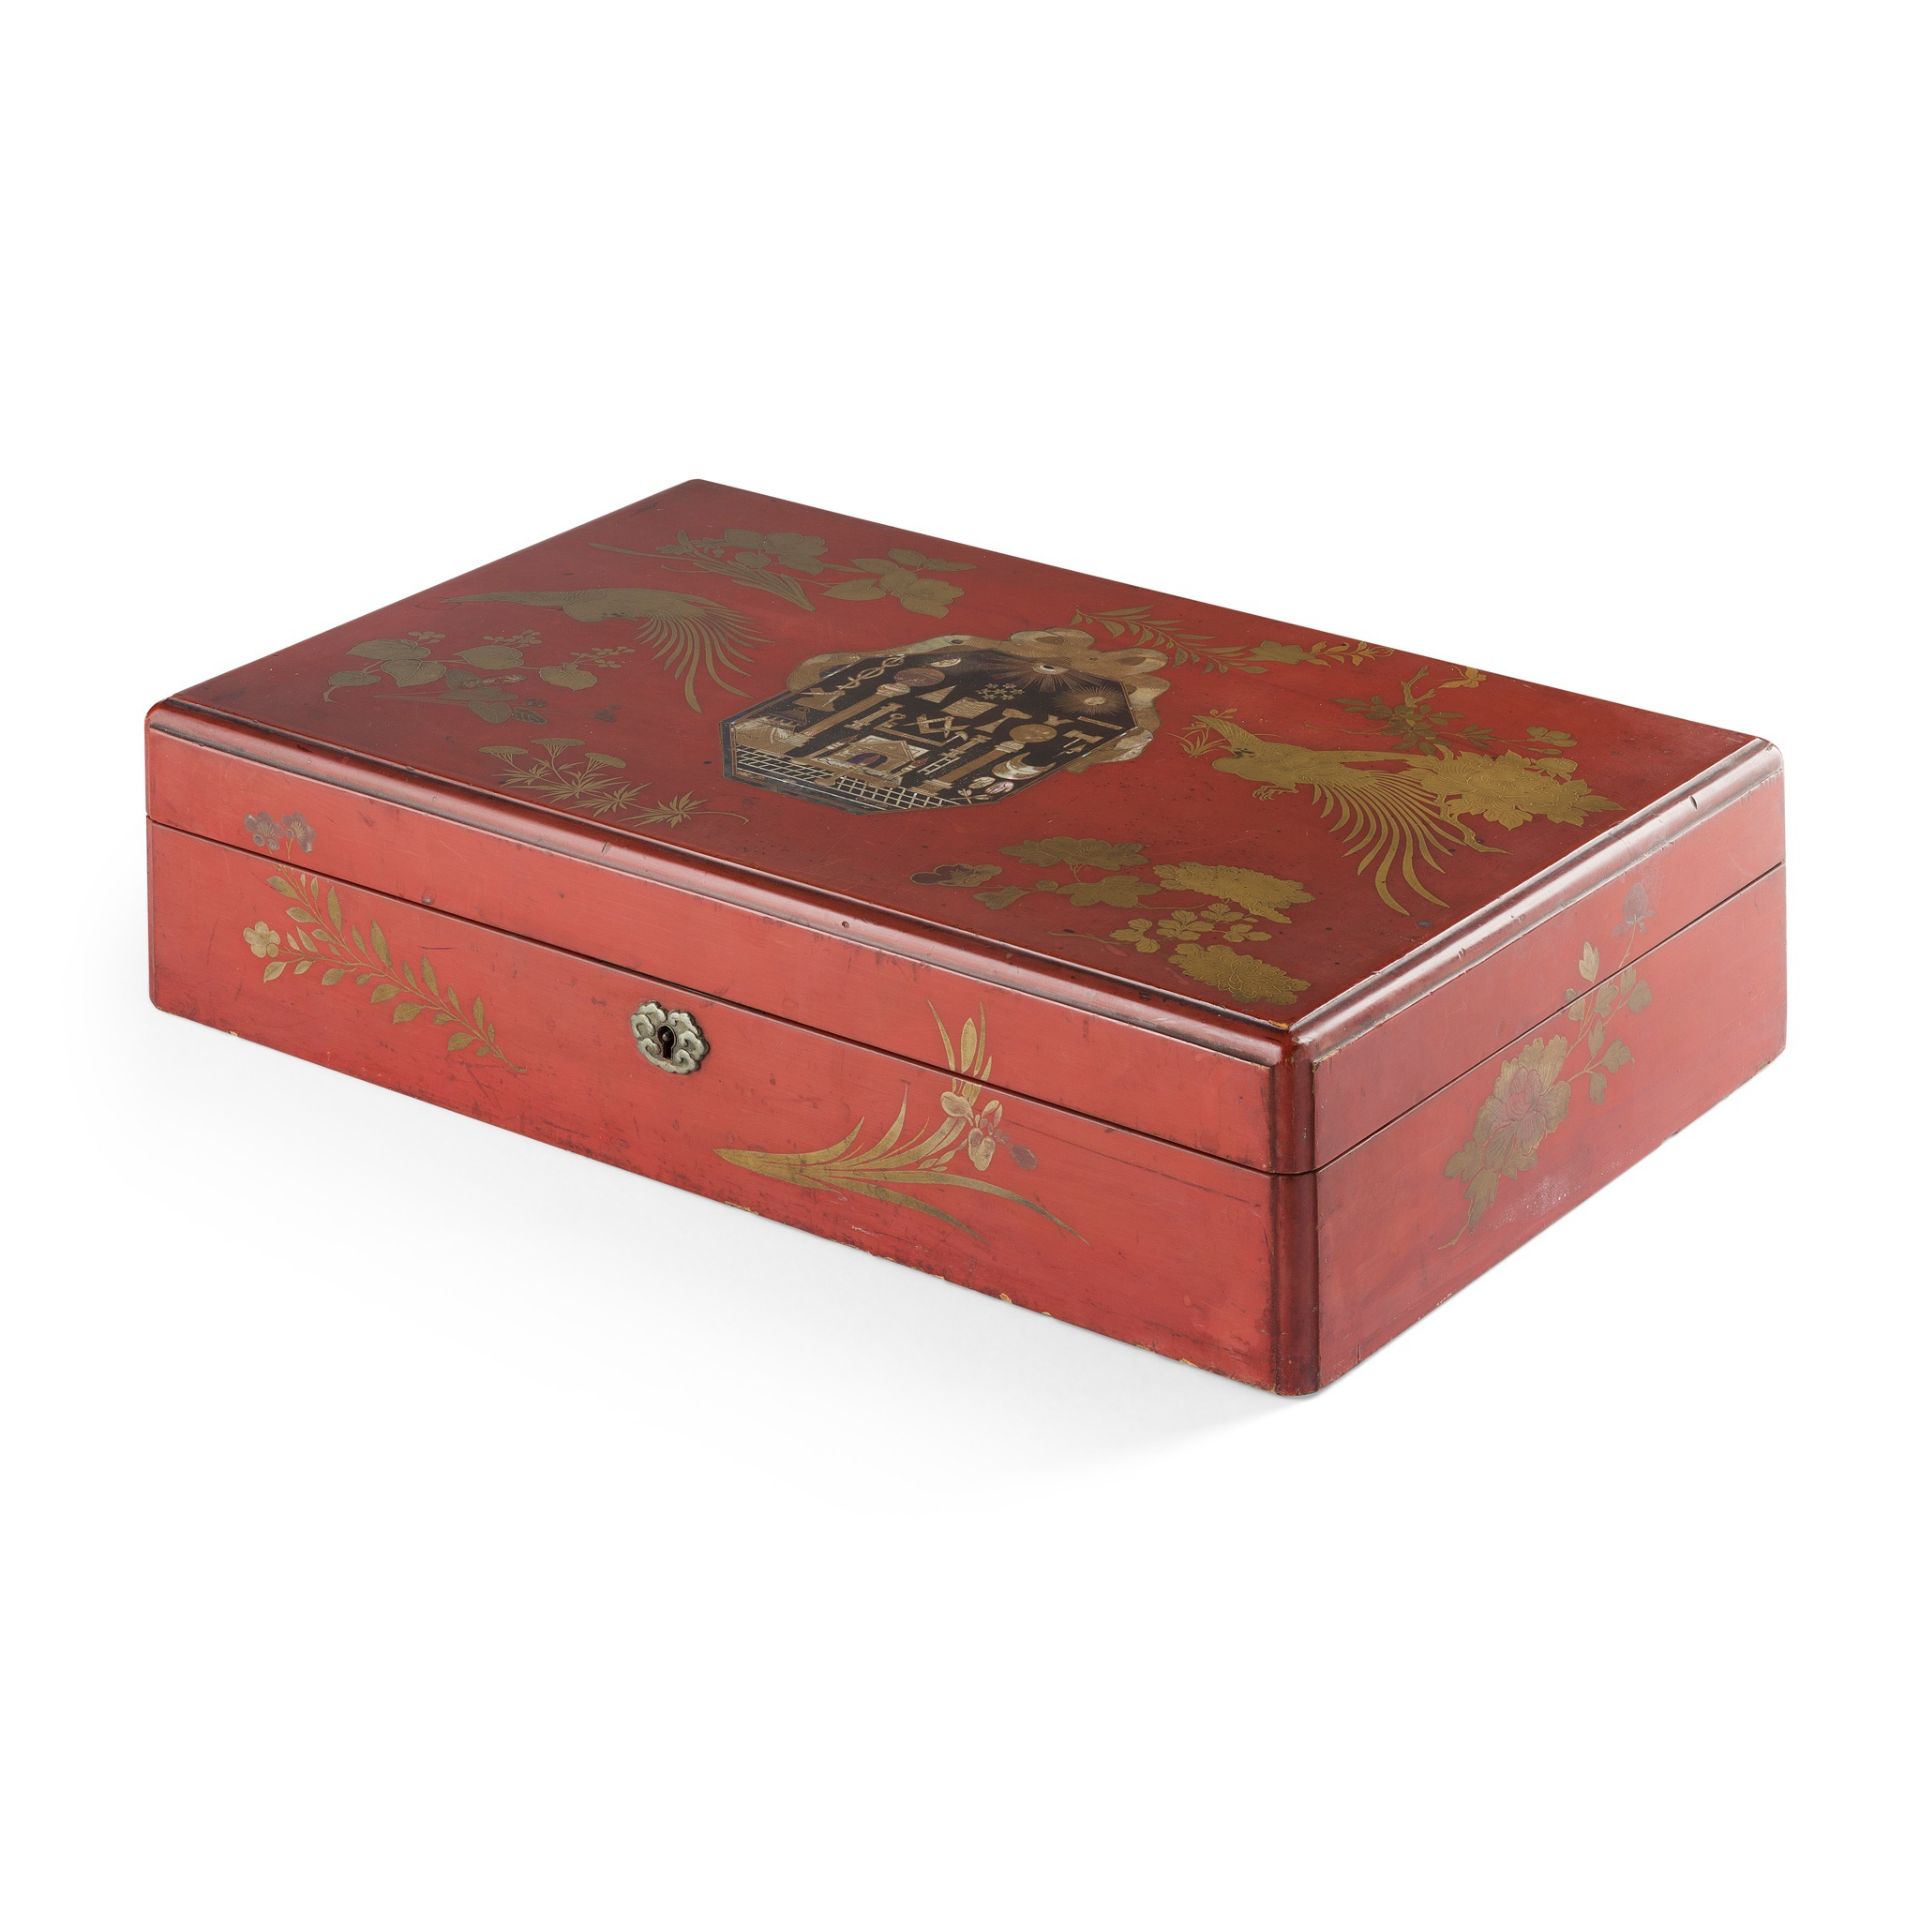 MASONIC INTEREST: JAPANESE RED LACQUER BOX 19TH CENTURY